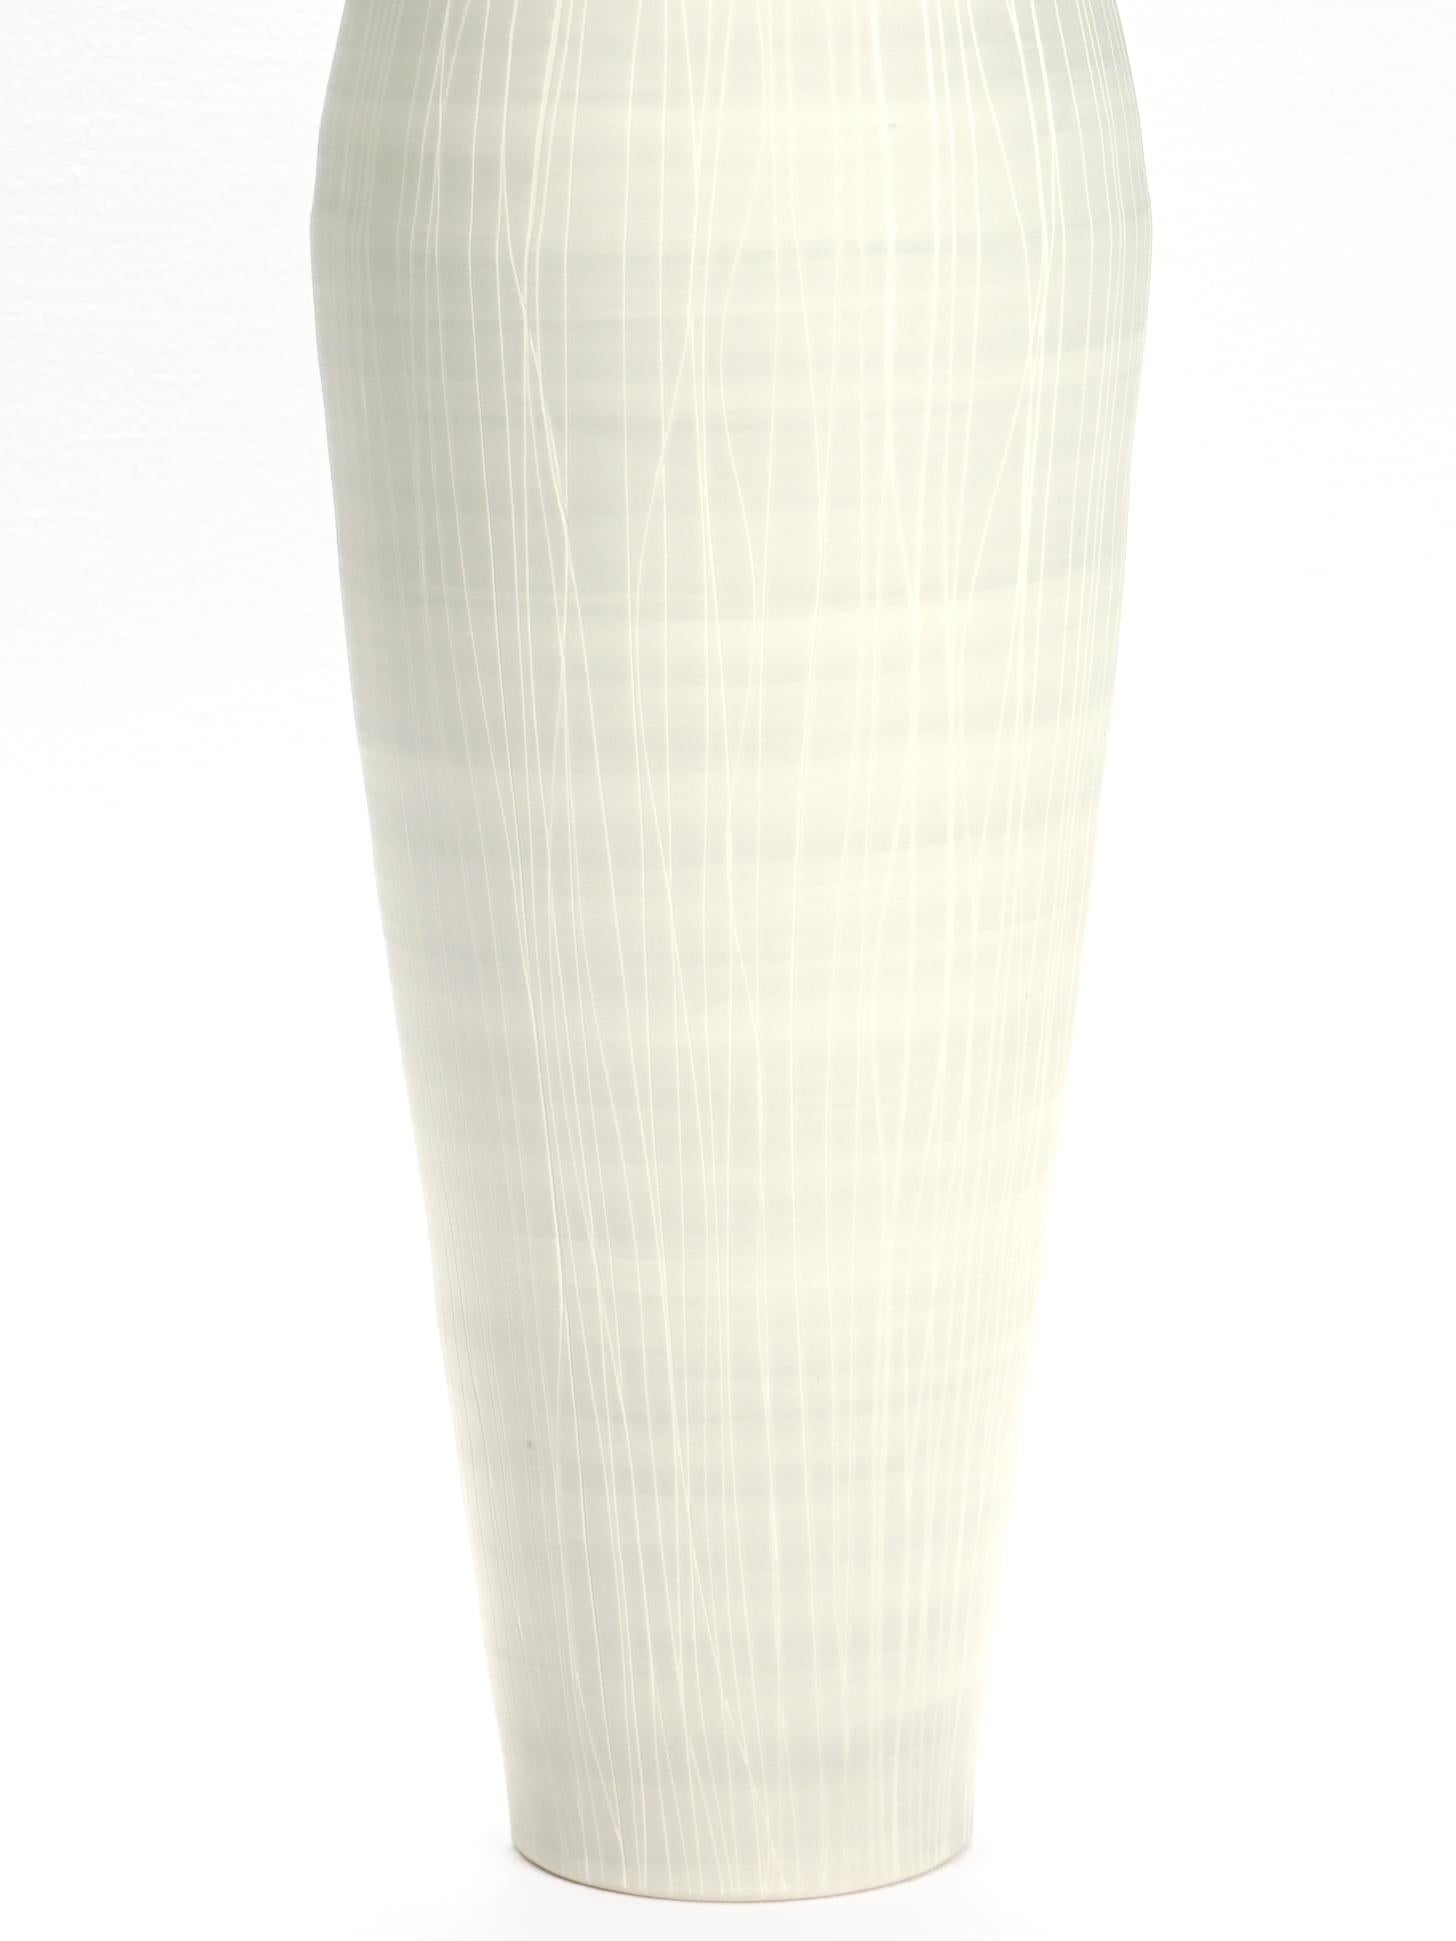 Large Signed Anna Sykora Sgraffito Vase For Sale 5